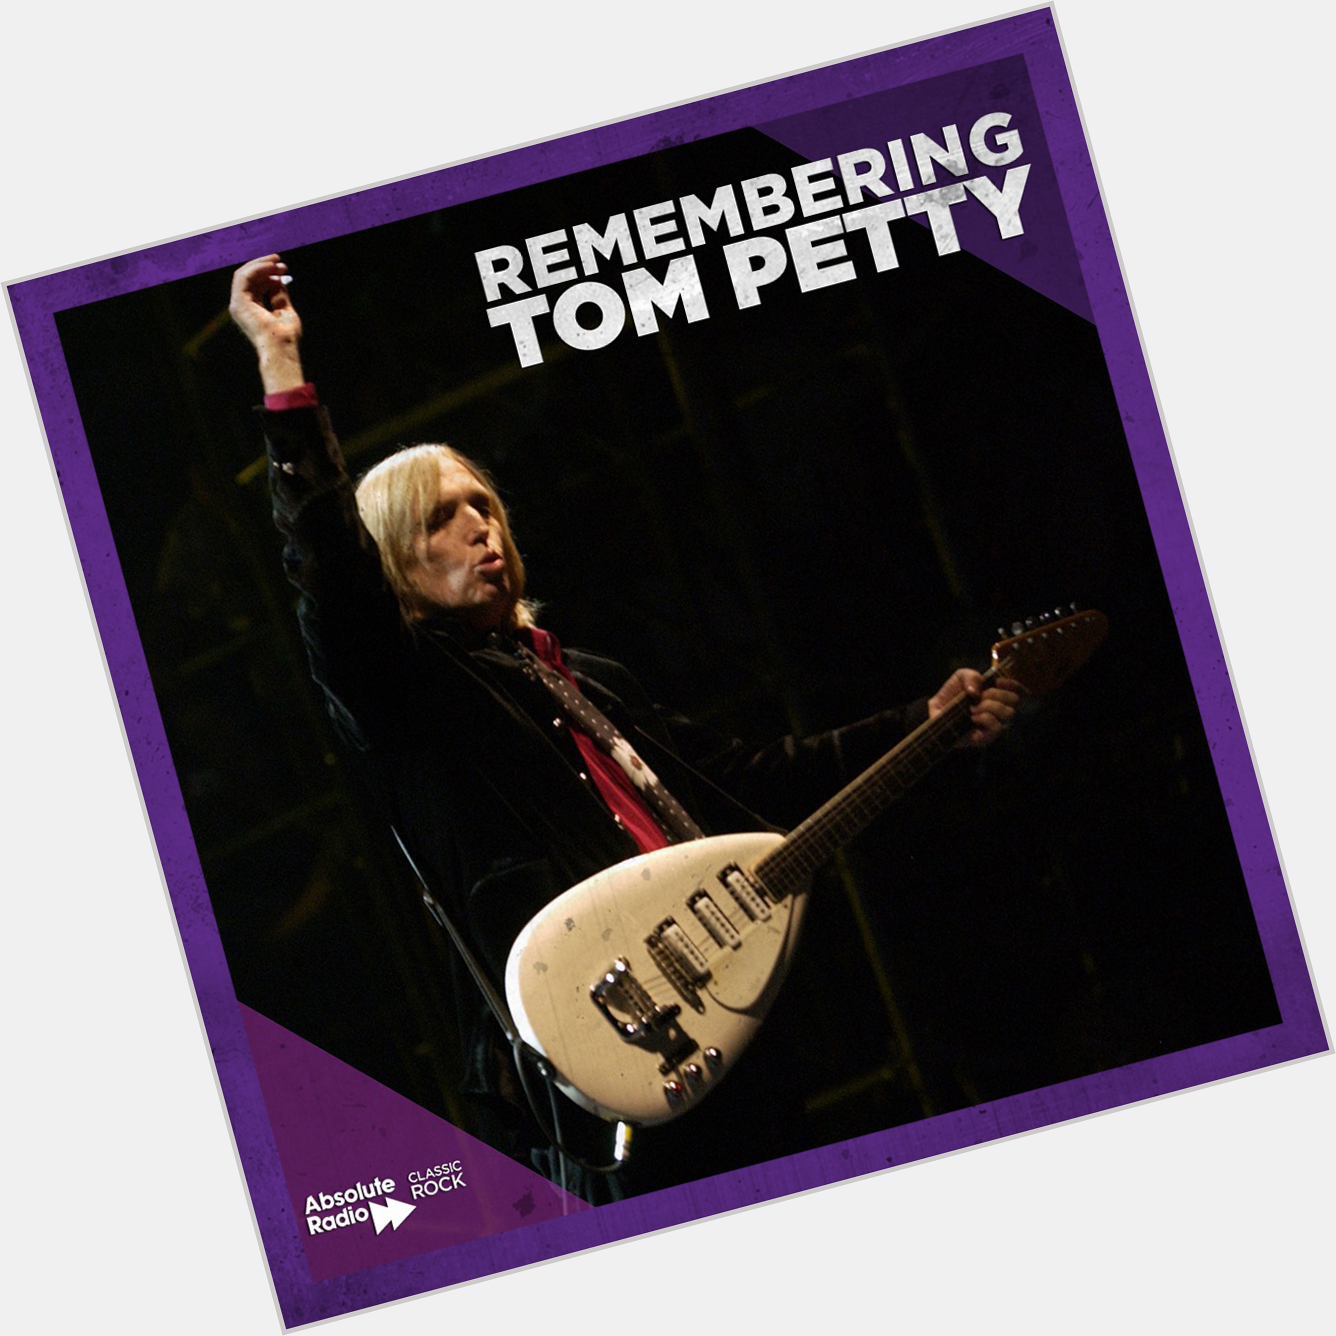 Happy birthday Tom Petty, music misses you 